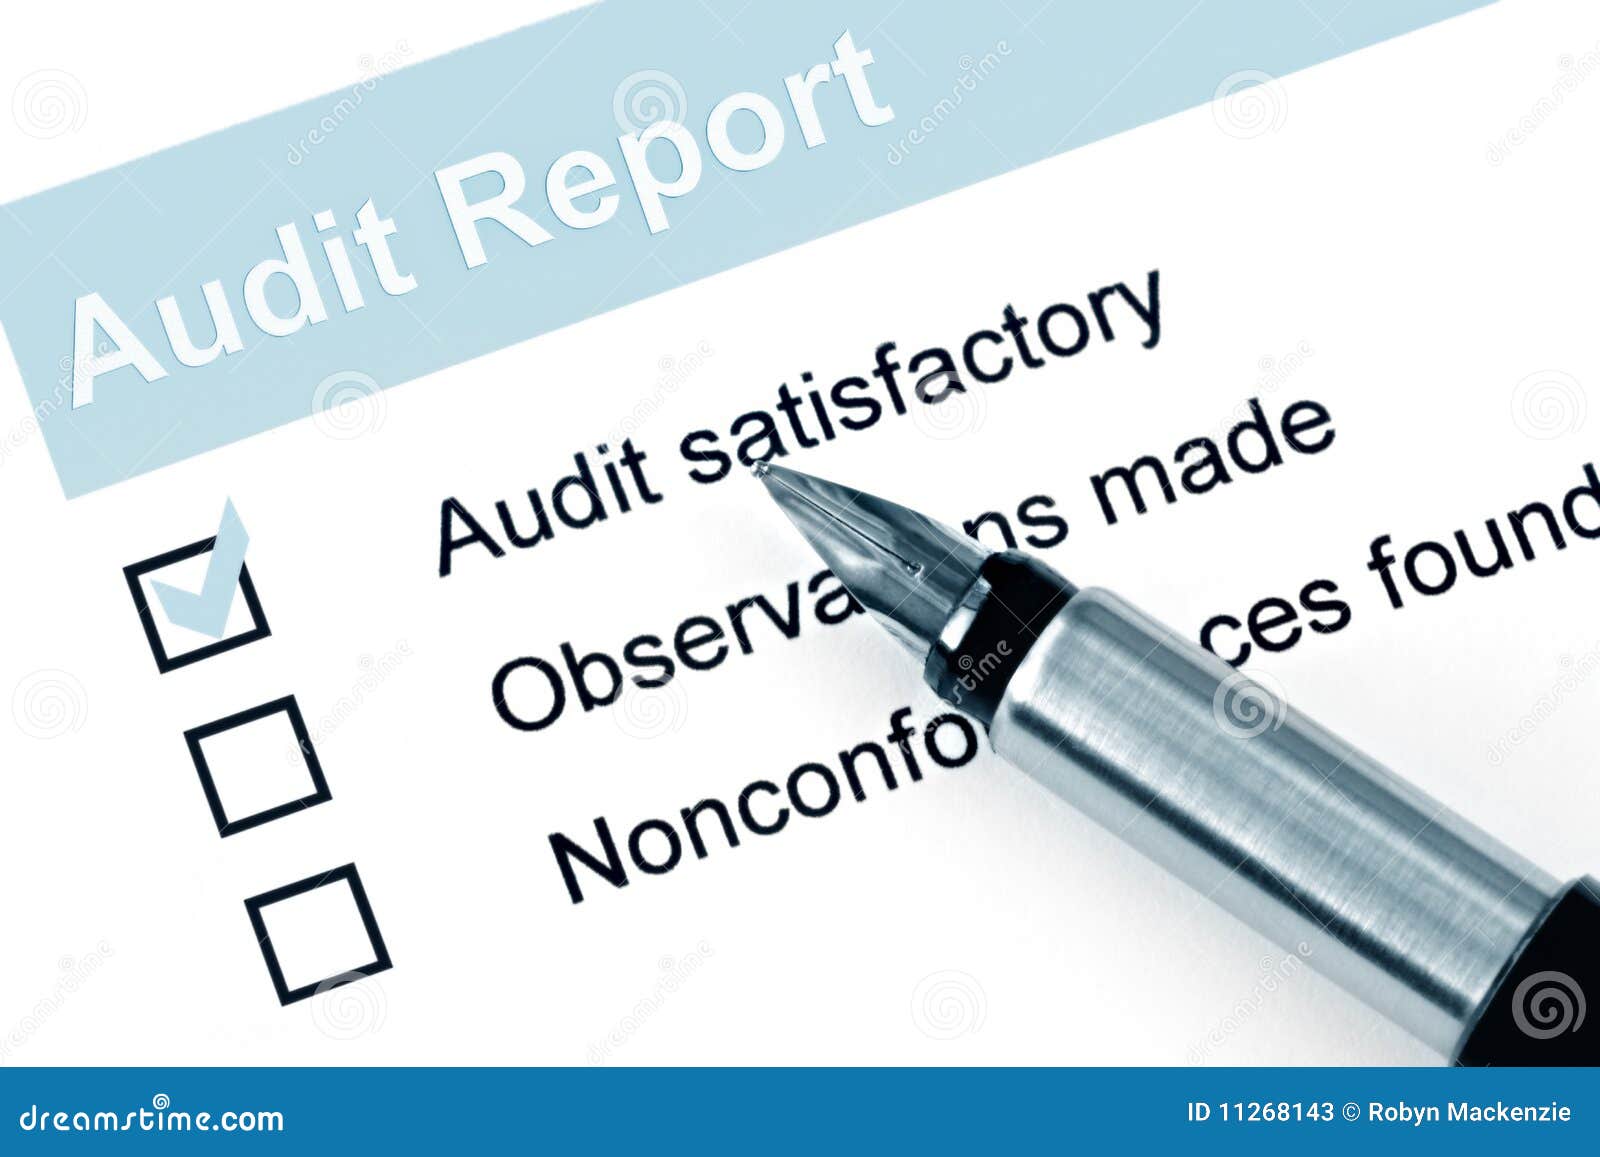 Audit Report Stock Photos - Image: 11268143